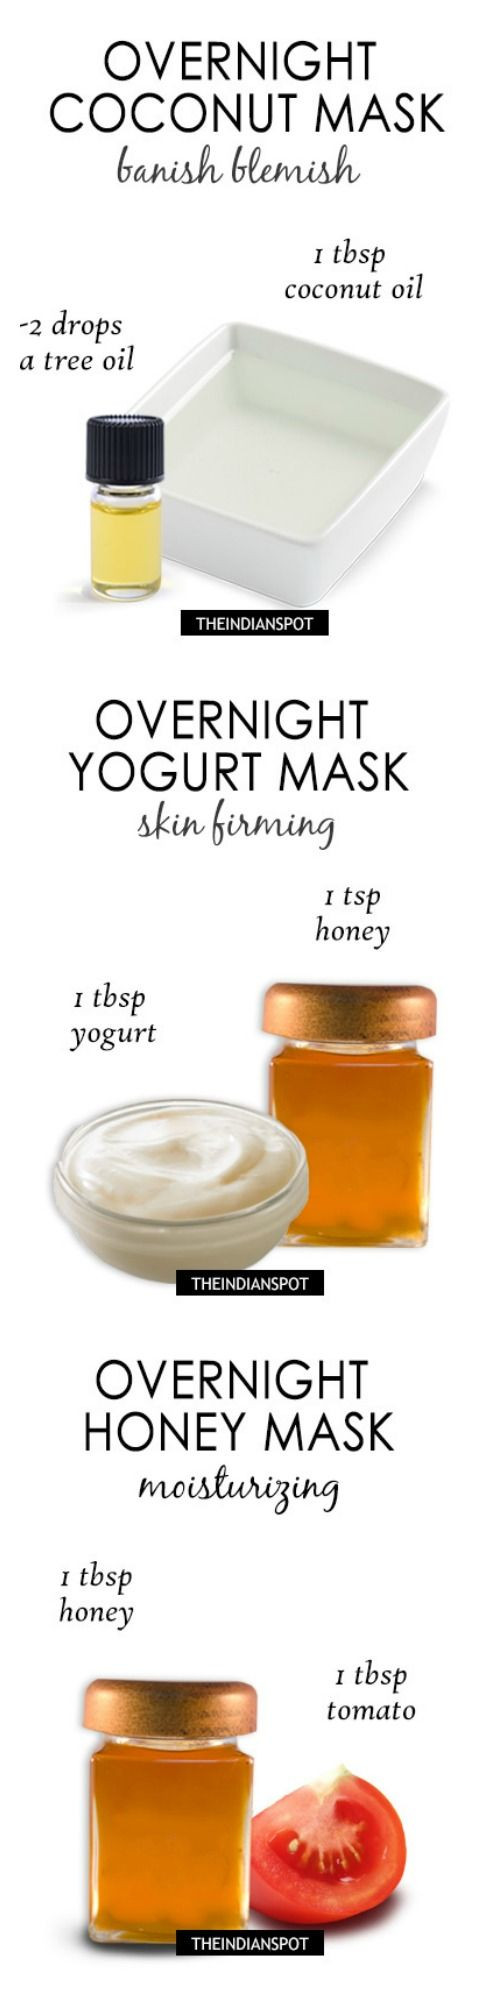 Overnight Face Mask DIY
 Overnight diy face mask